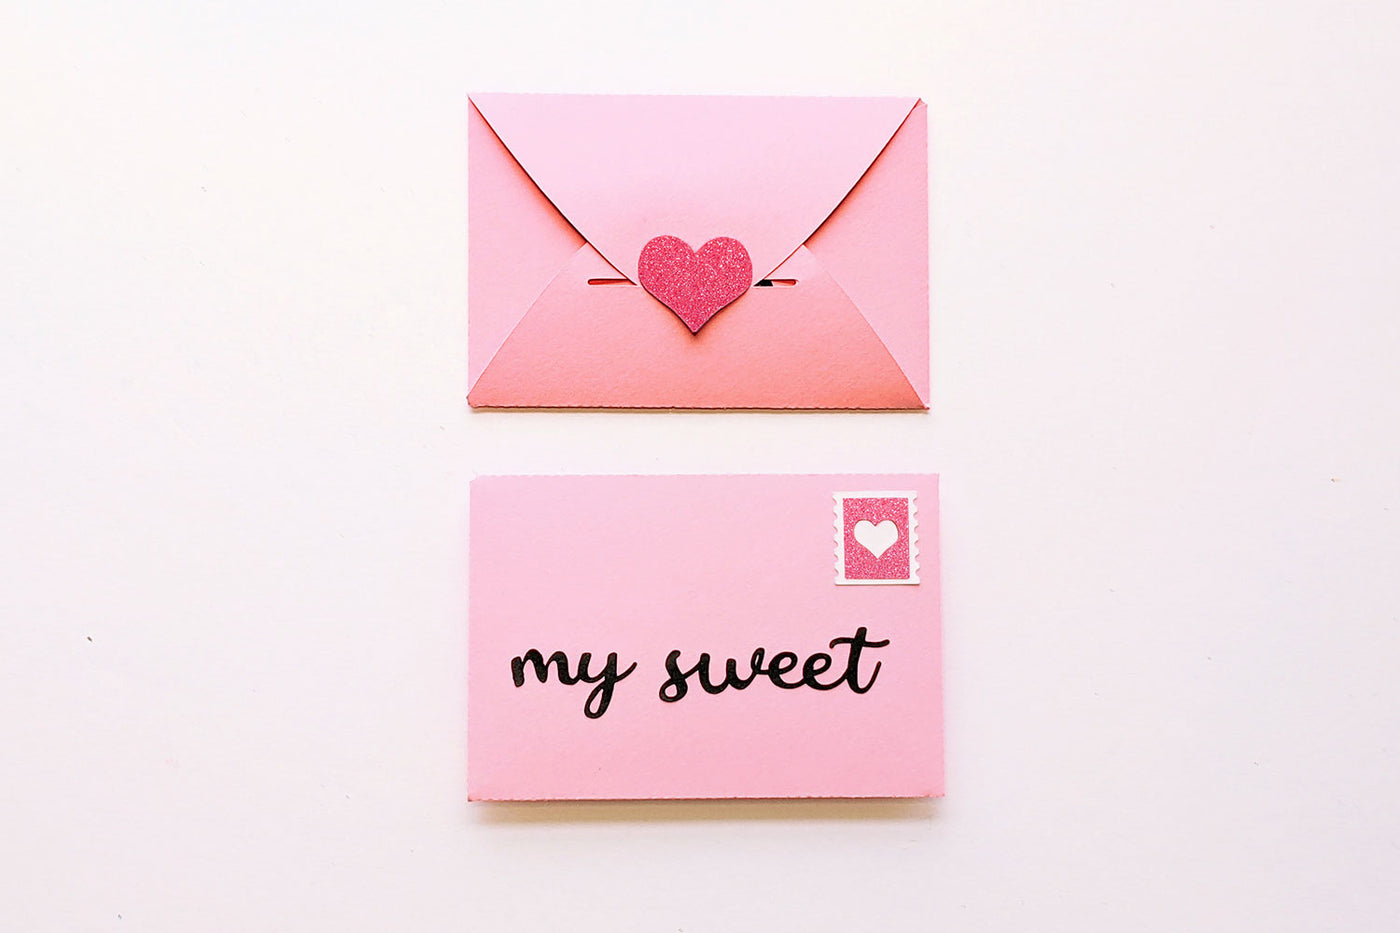 Valentine's day gift card envelope